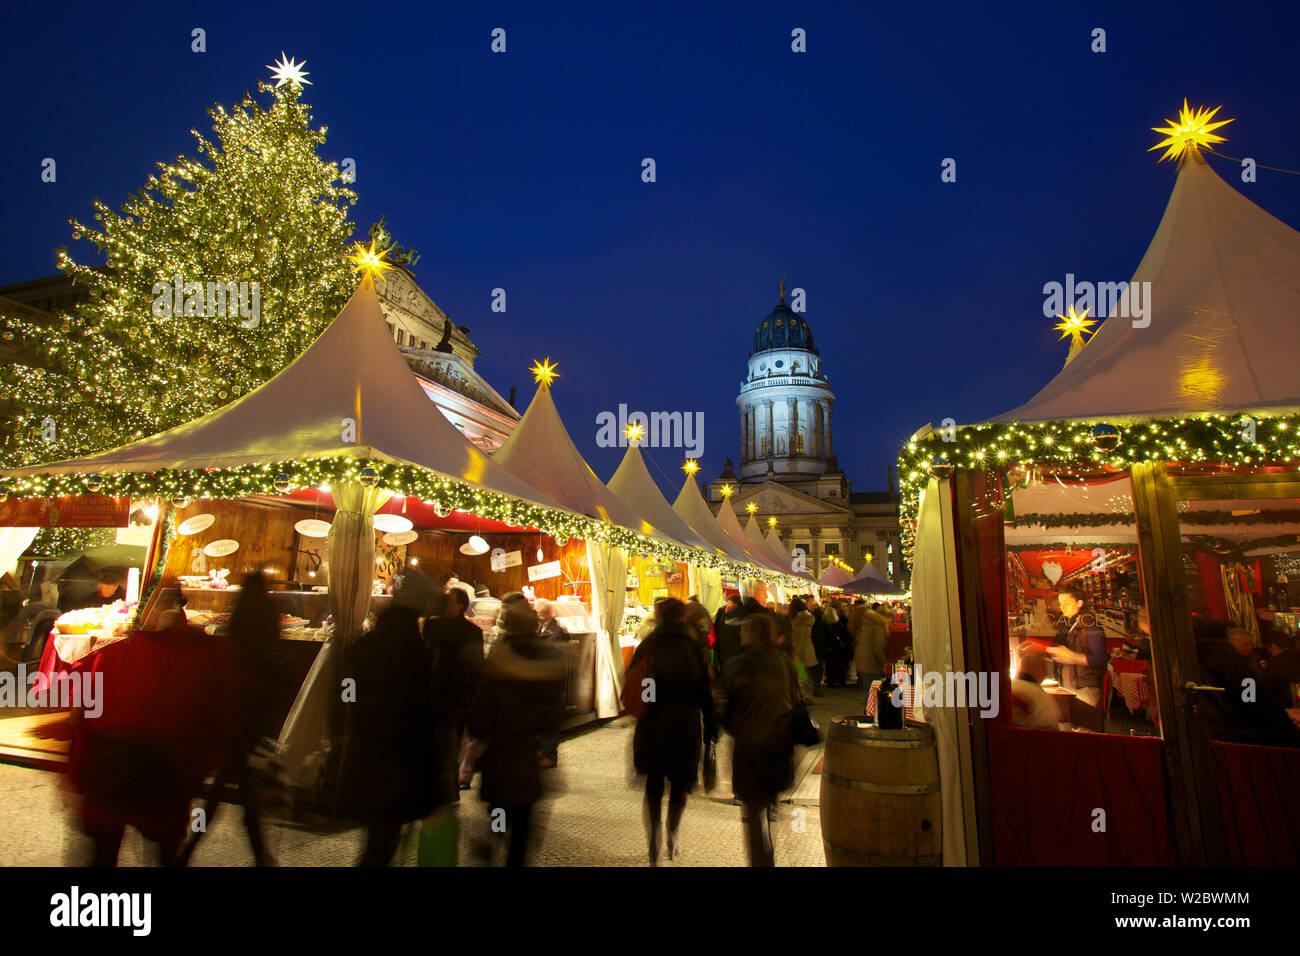 Xmas Market, French Cathedral, Gendarmenmarkt, Berlin, Germany, Europe. Stock Photo